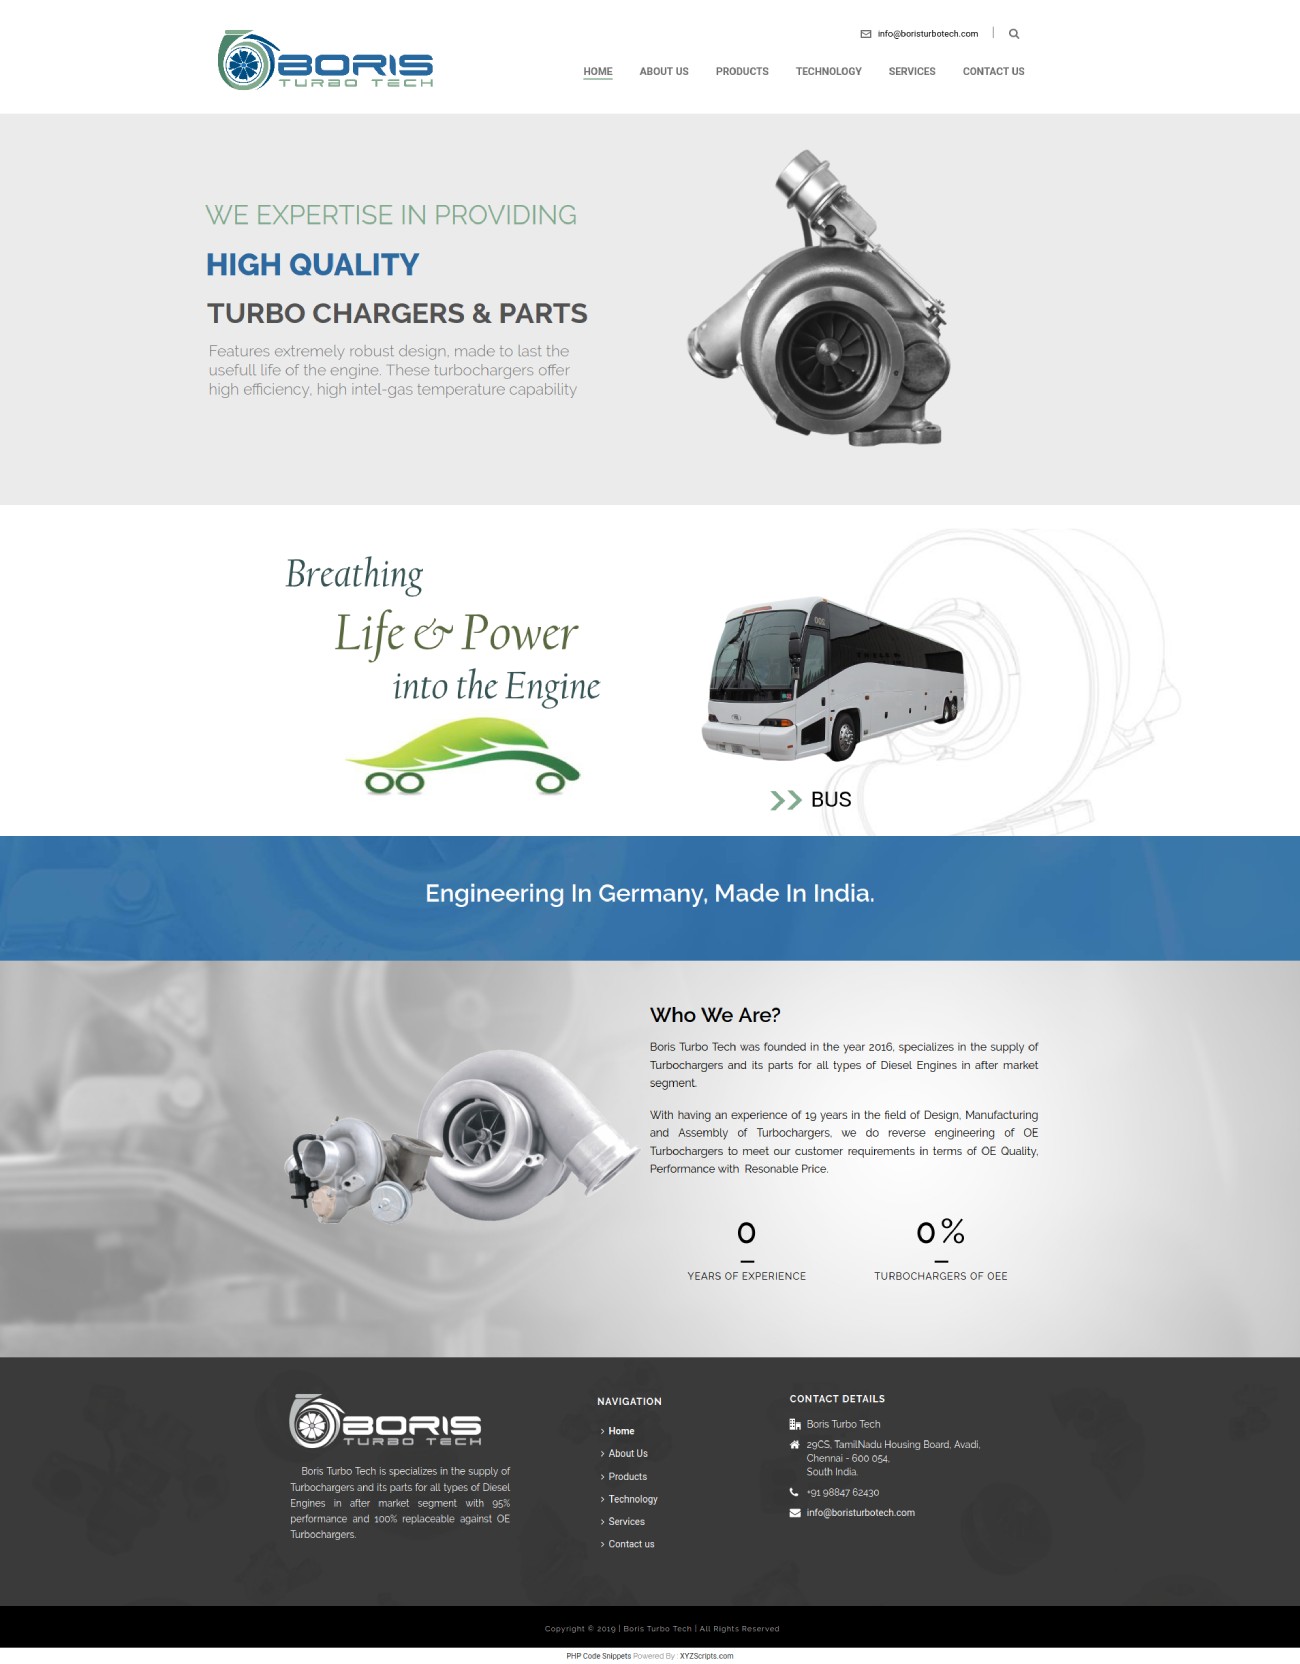 boris turbotech homepage - iStudio Technologies